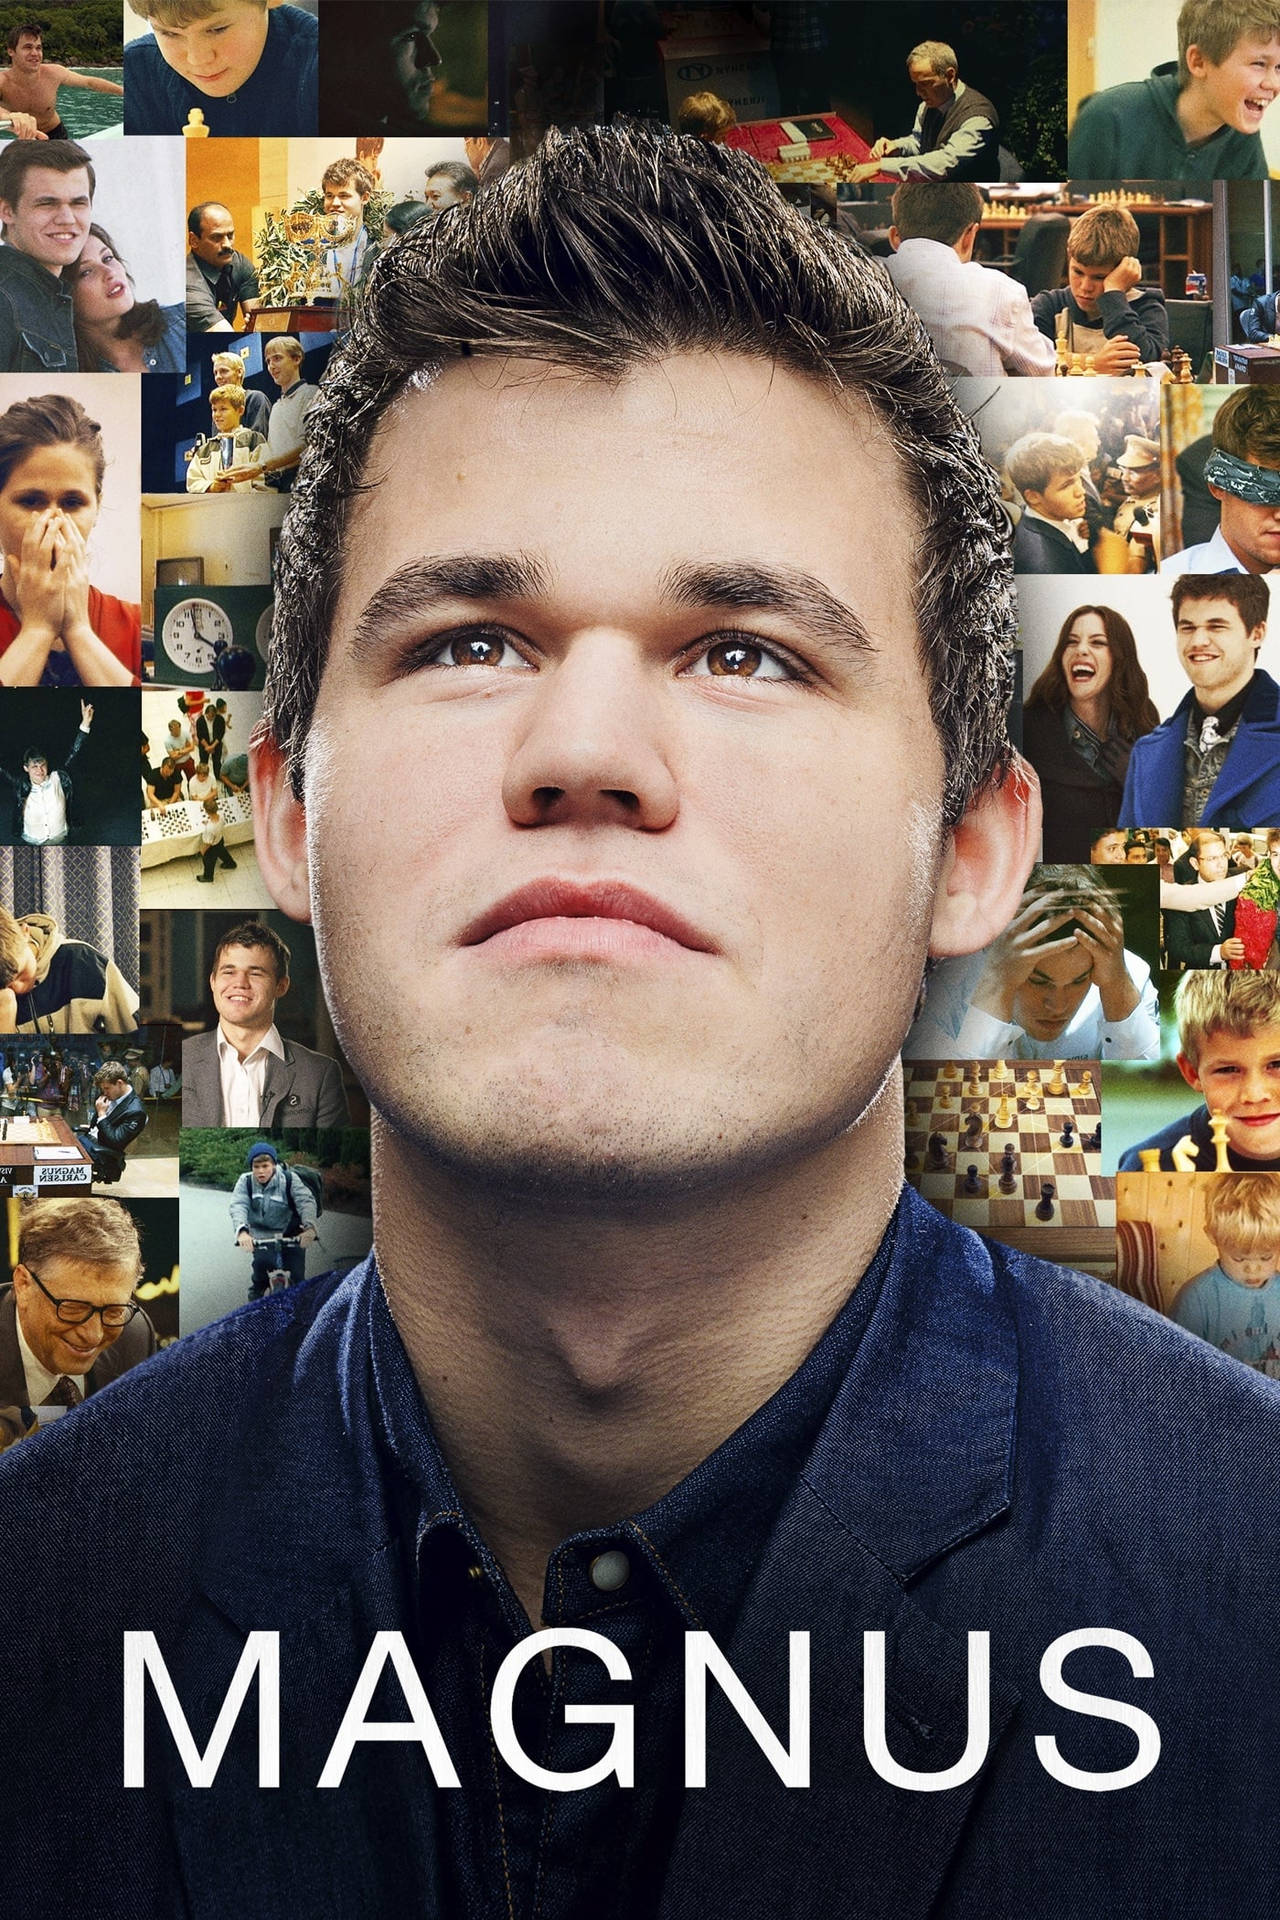 World Chess Champion Magnus Carlsen in reflective pose Wallpaper